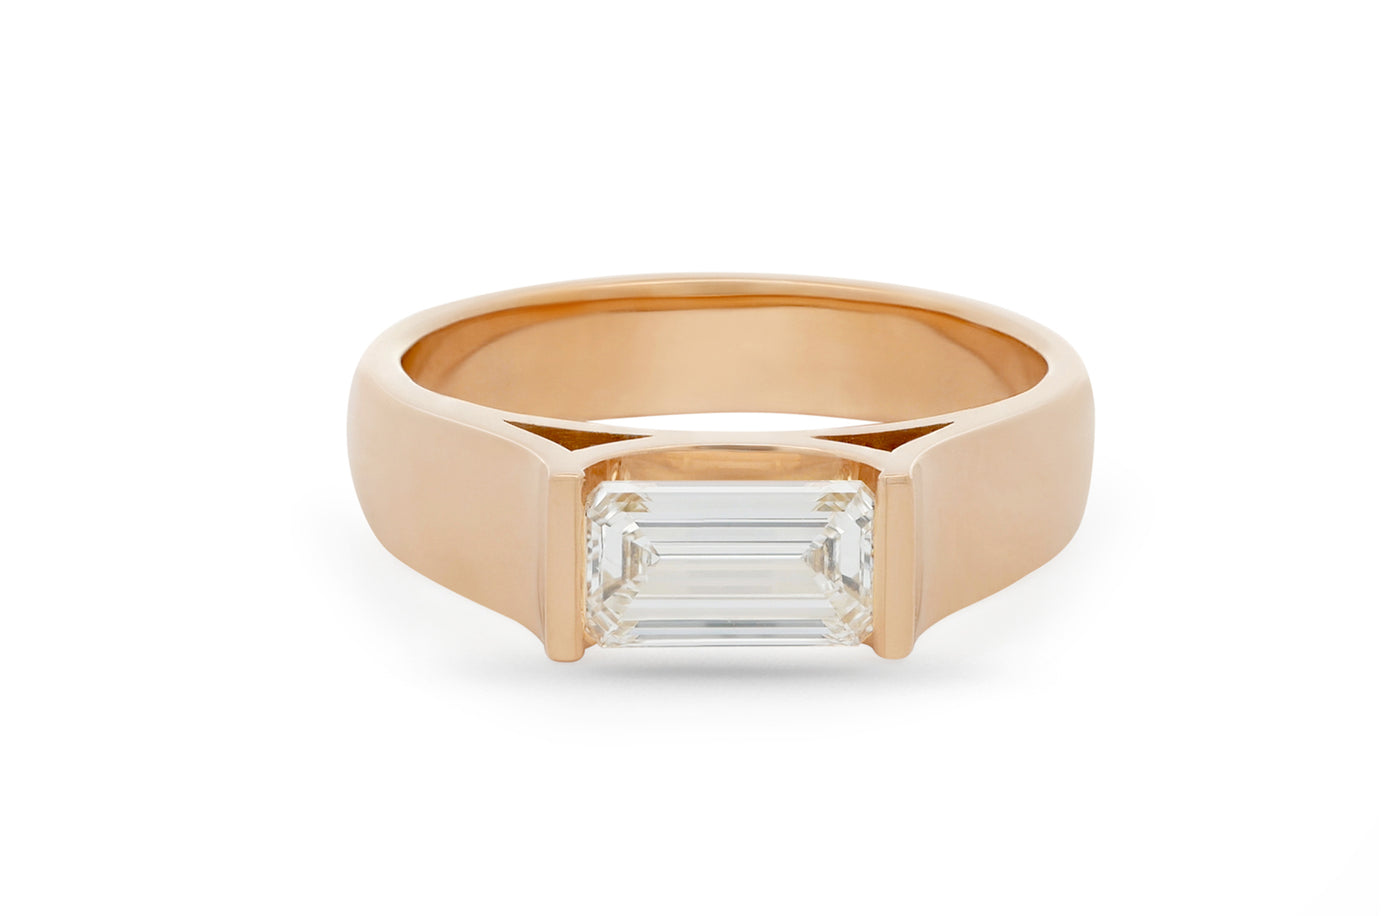 Celeste: Emerald Cut Diamond Solitaire Ring